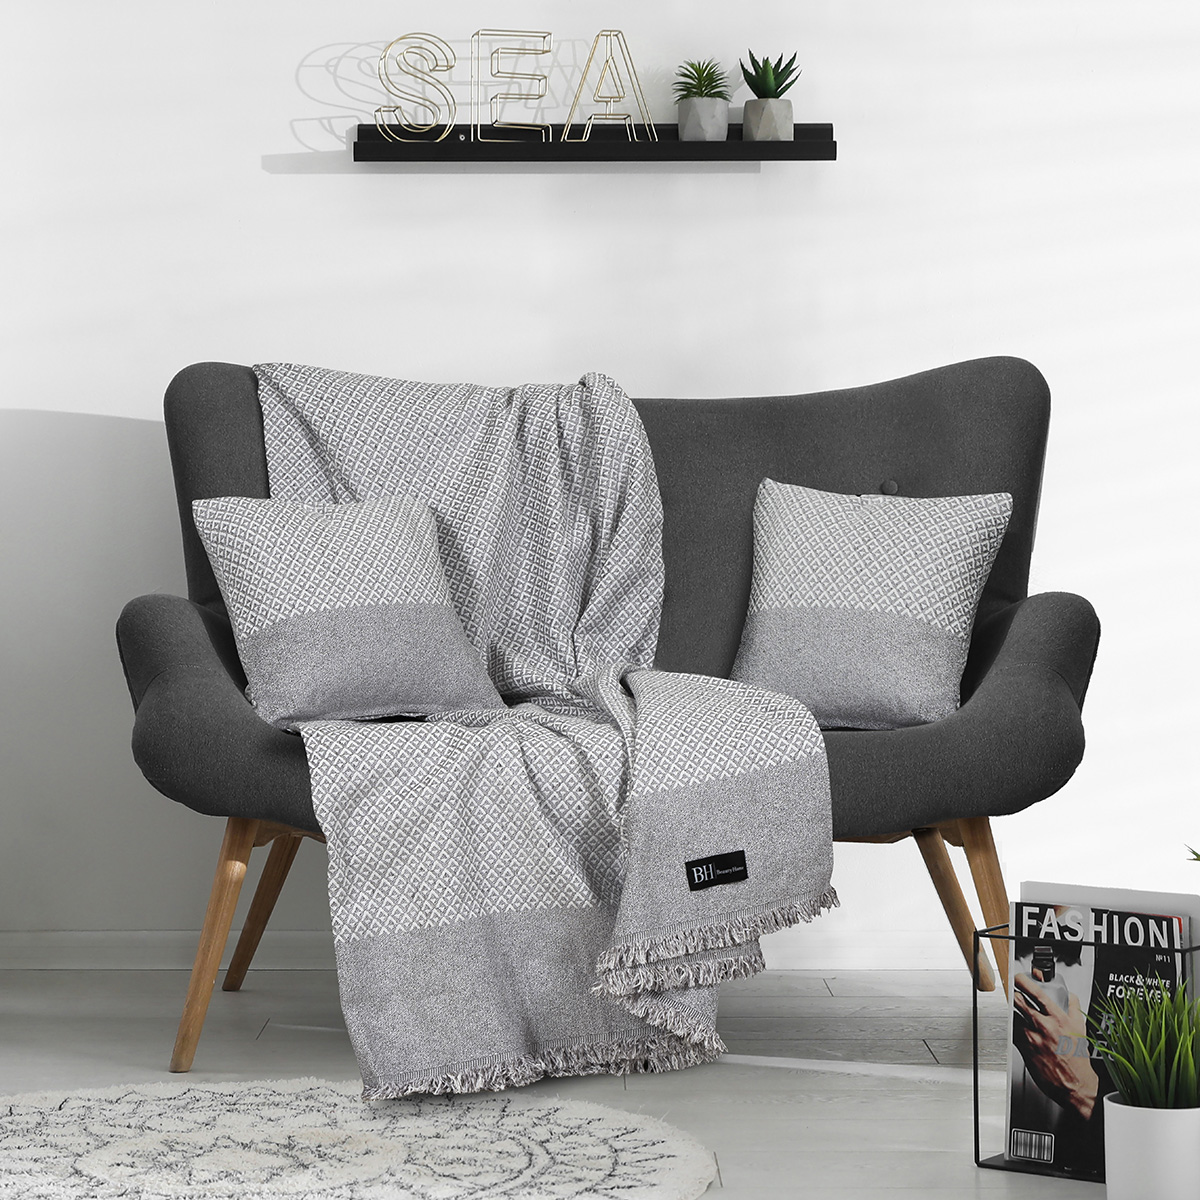 Stylish,Living,Room,Interior,With,Comfortable,Sofa